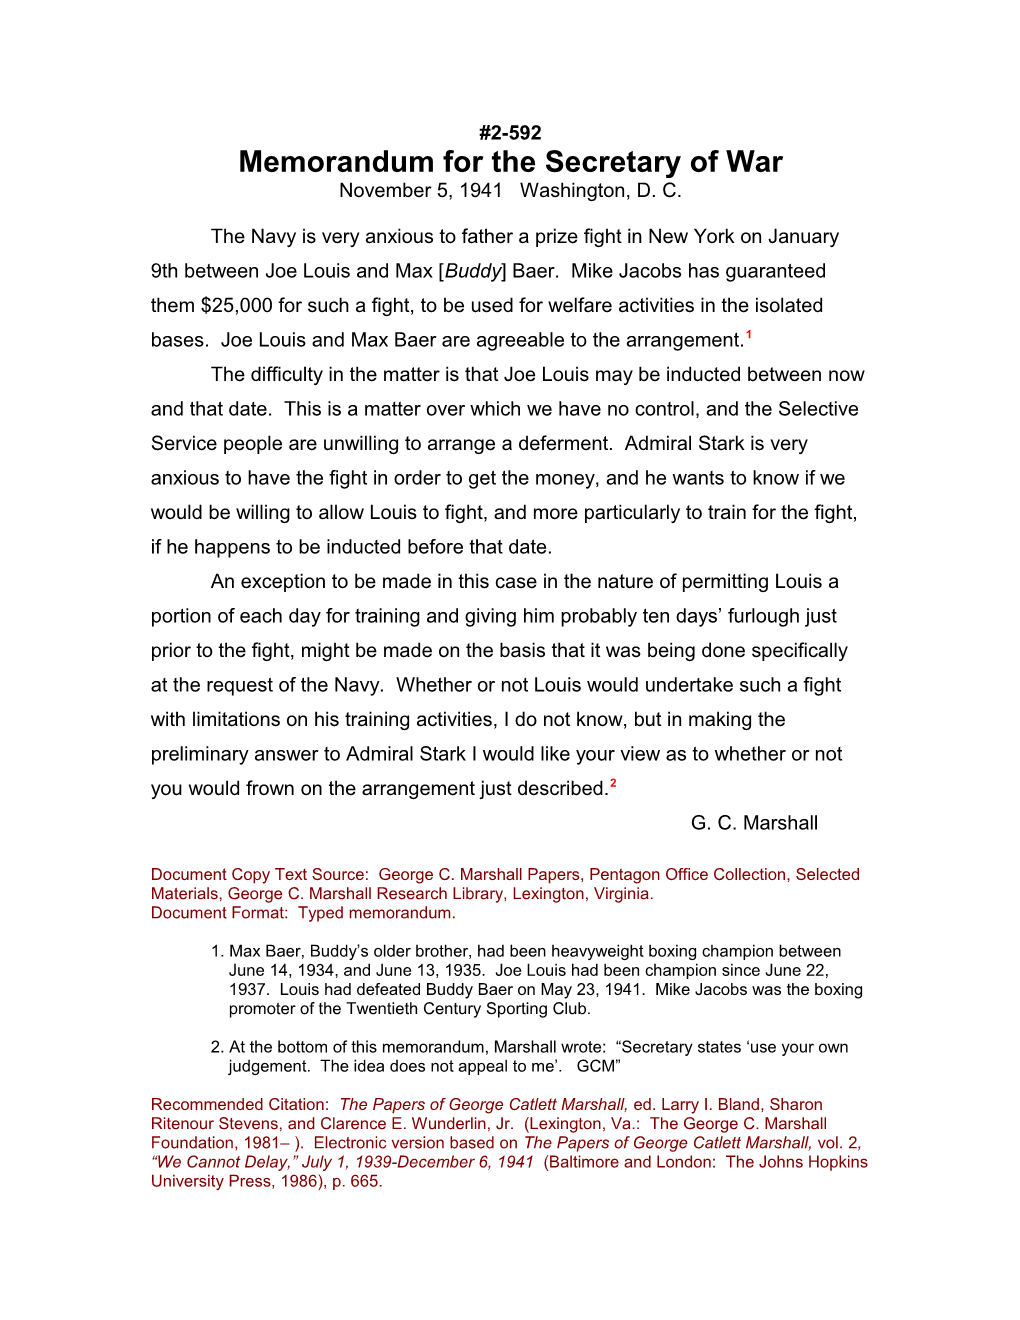 Memorandum for the Secretary of War s1